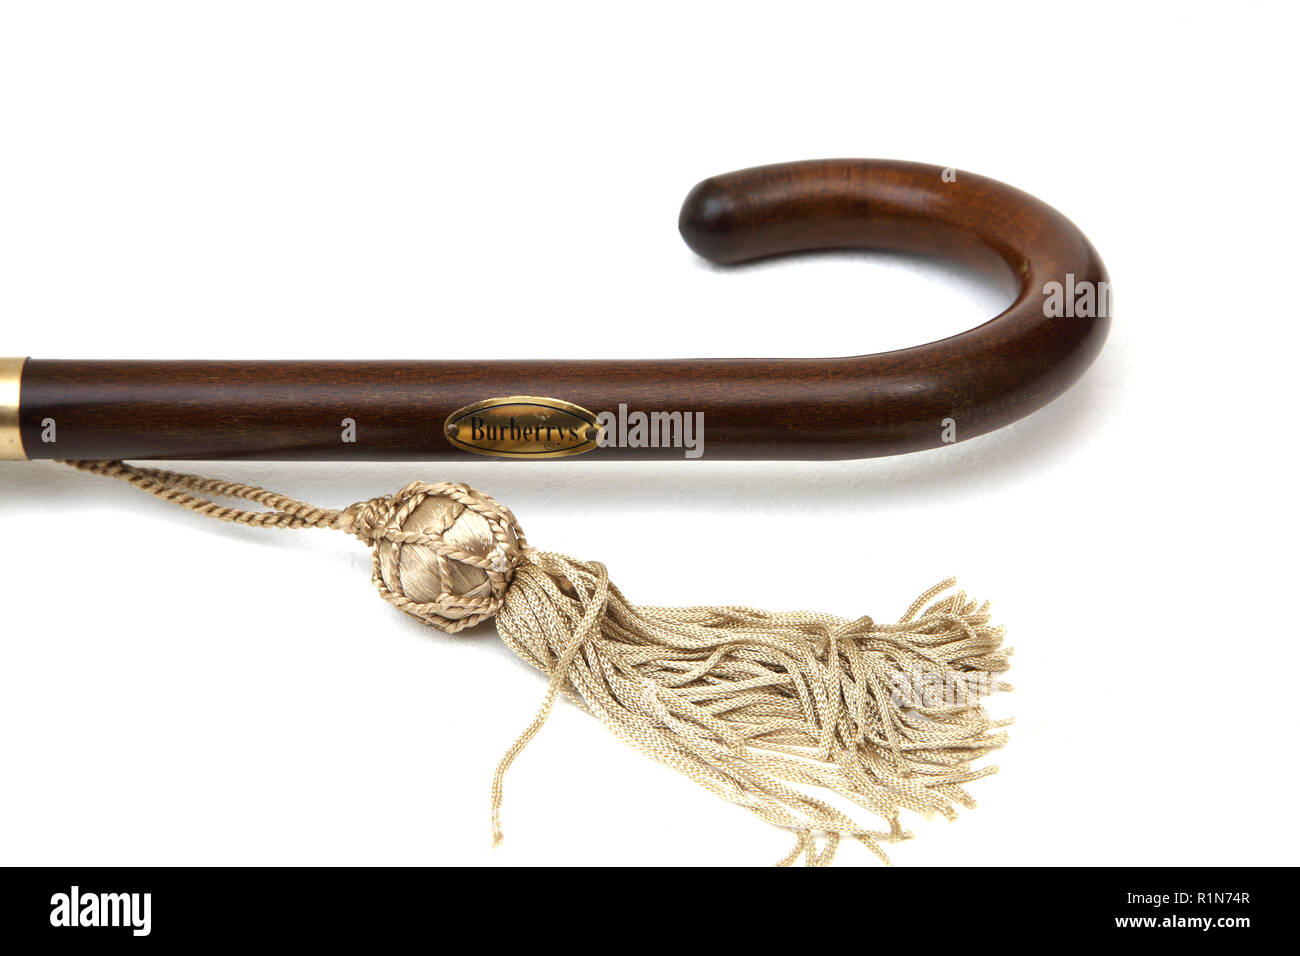 Wooden Handle and Tassel of Burberry's Umbrella Stock Photo - Alamy